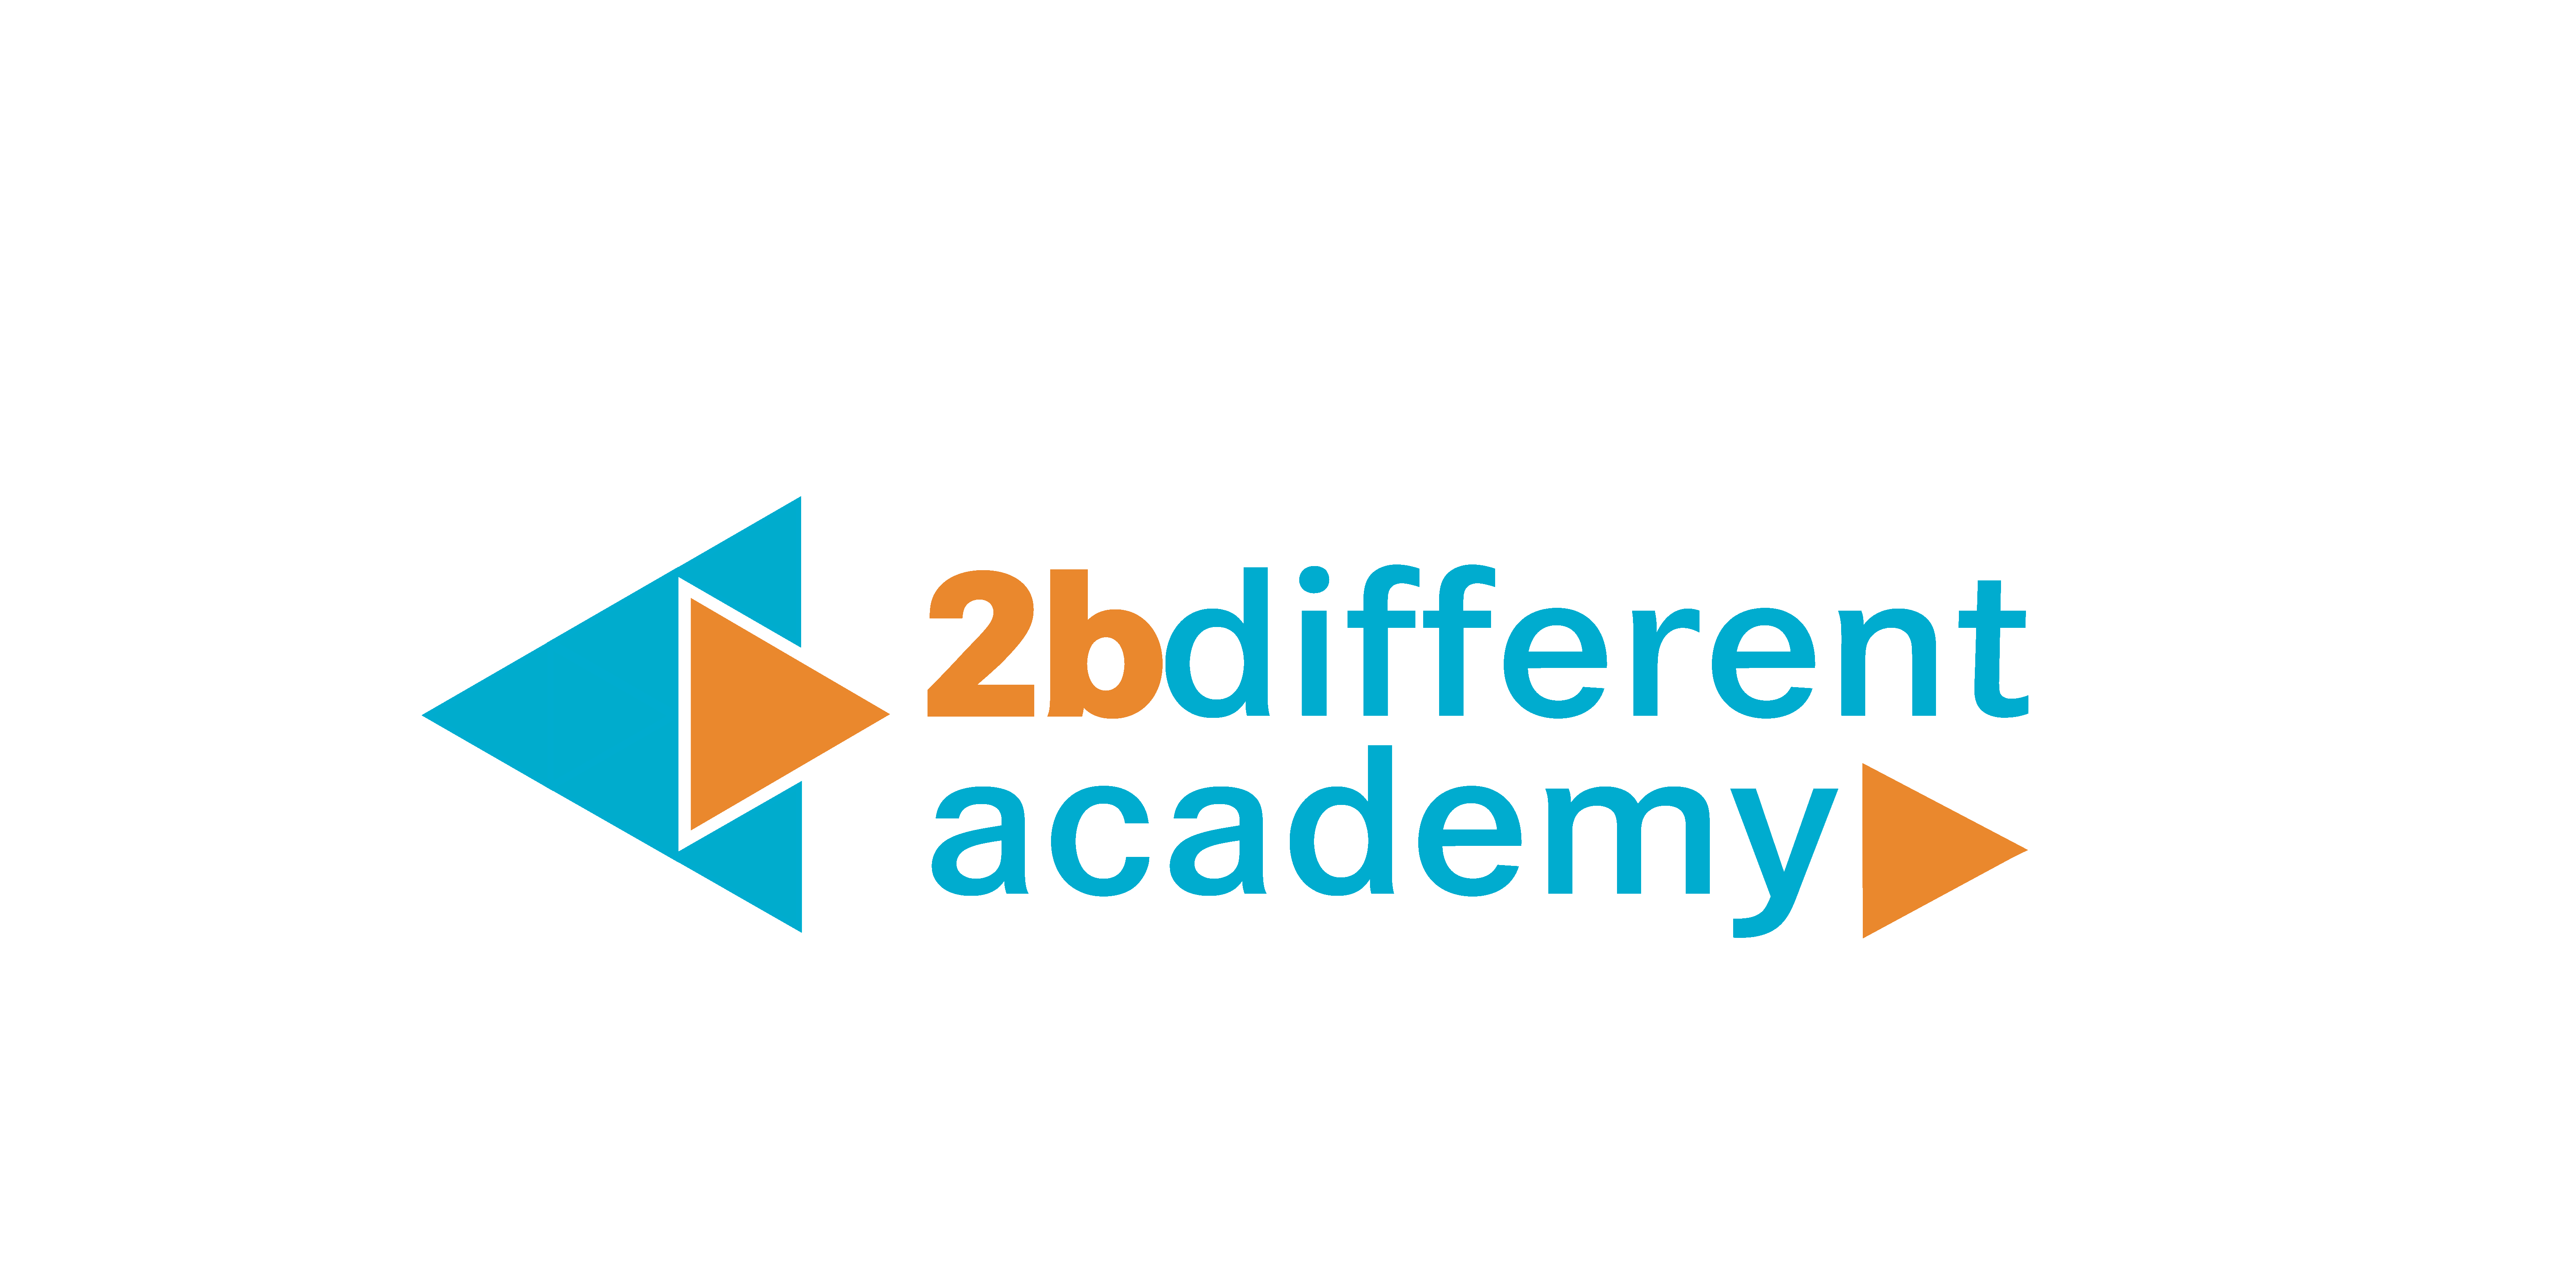 2bdifferent-academy